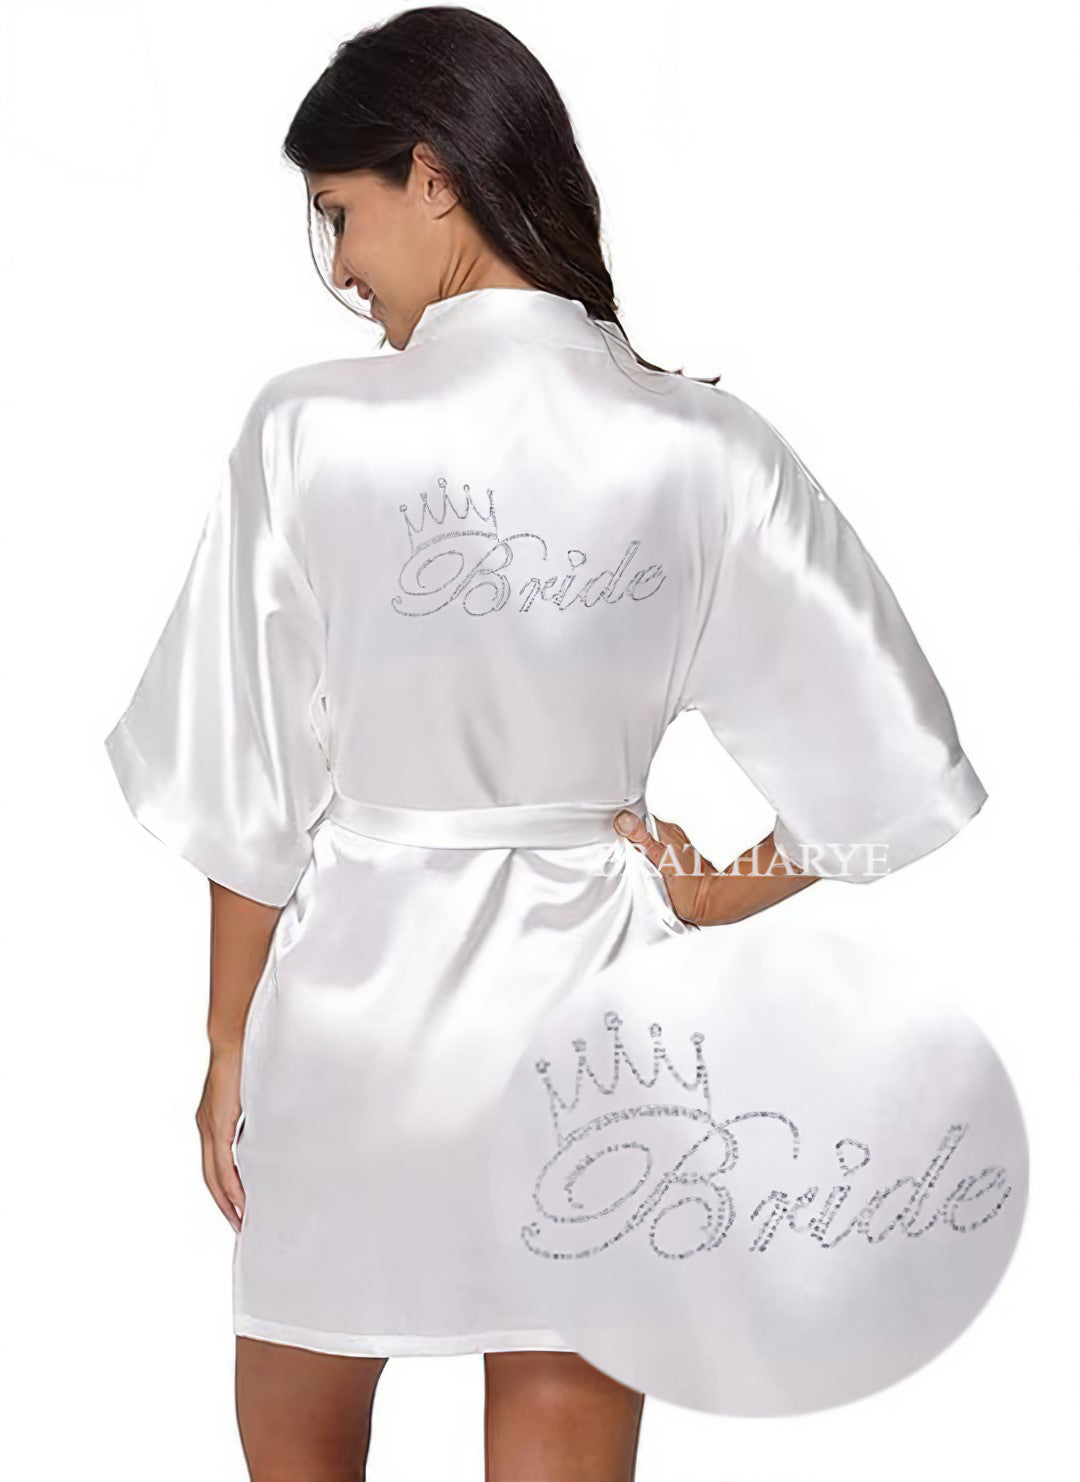 Pratiharye Rhinestone and Plain Robe for Bride and Bridesmaid - Satin Robe - Bride Robe for Wedding - Robe Bridesmaid - Bachelorett - Plain & Printed